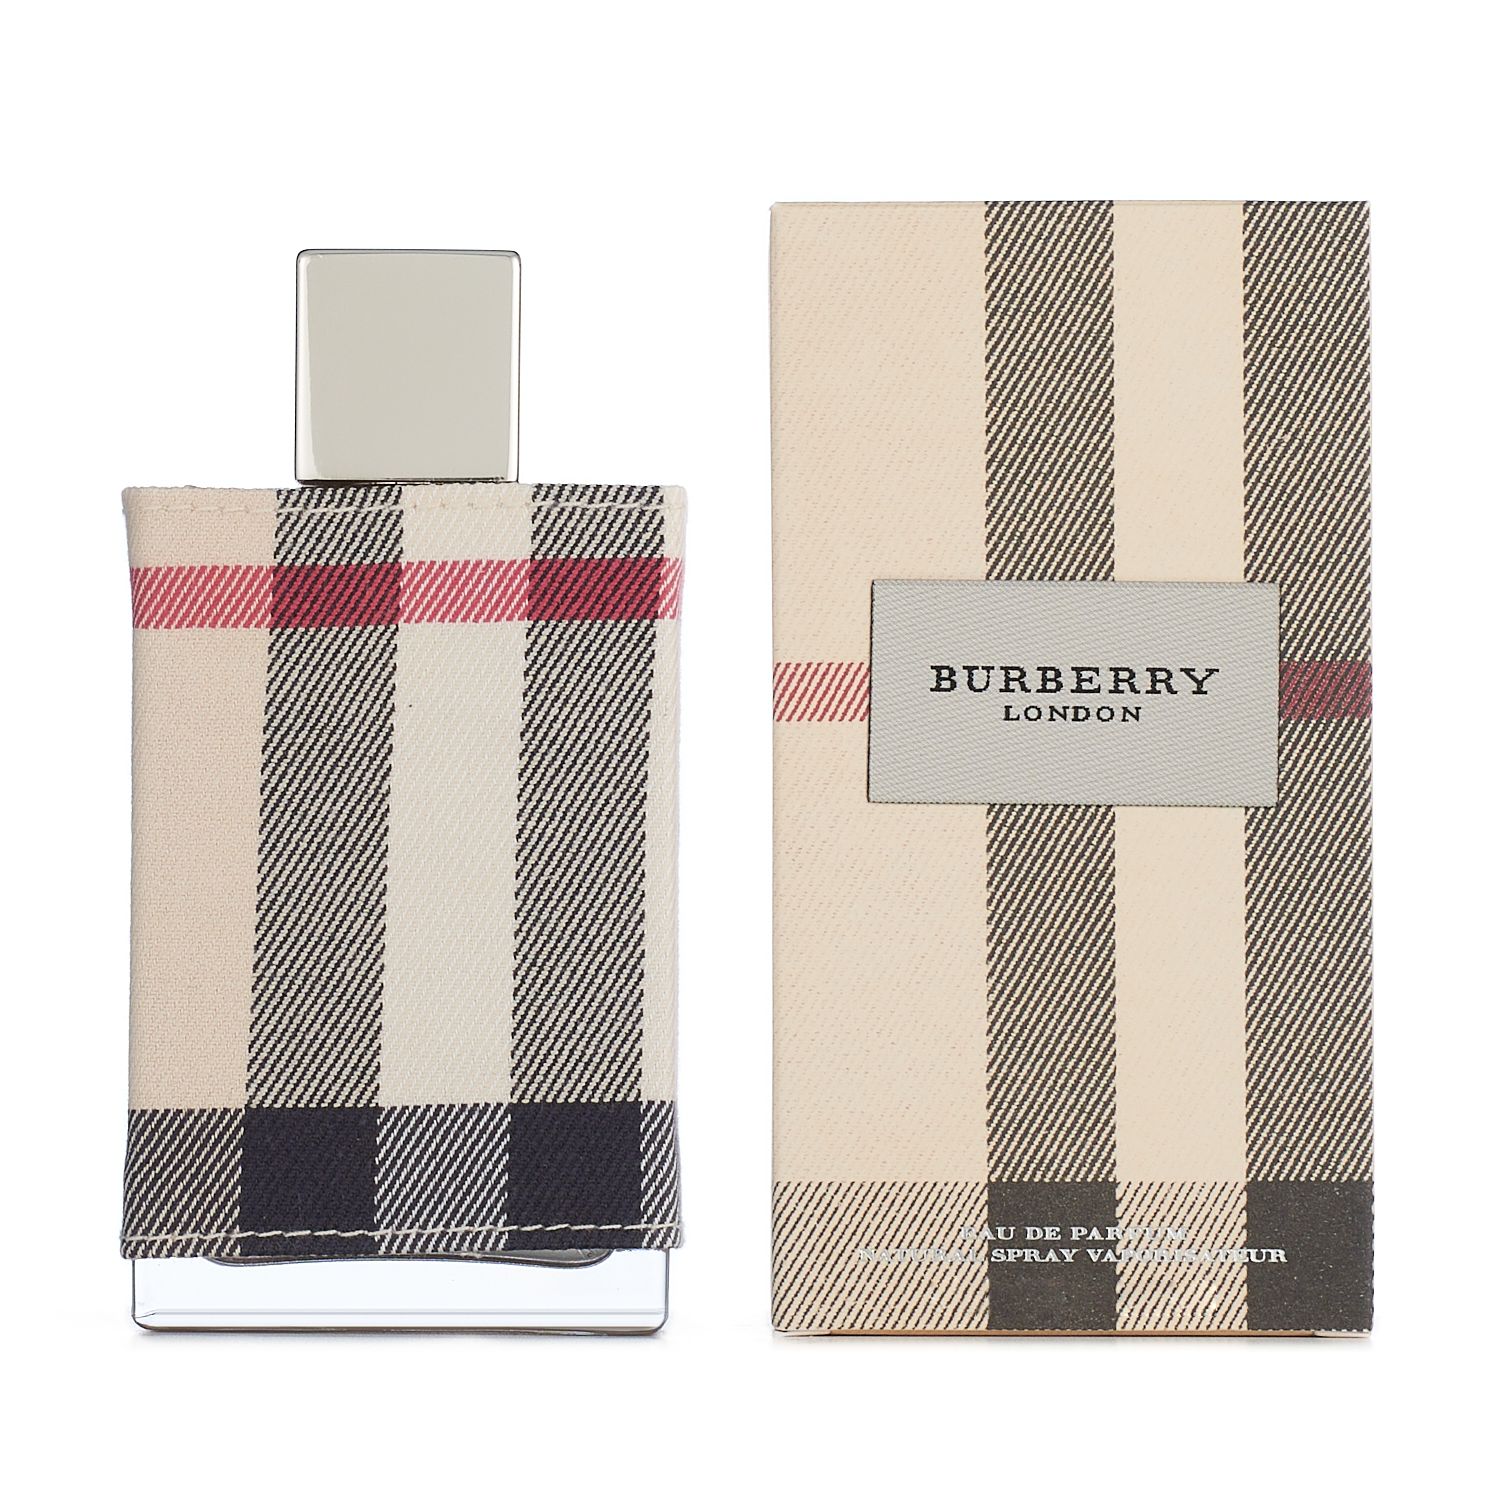 Burberry London Women's Perfume - Eau 